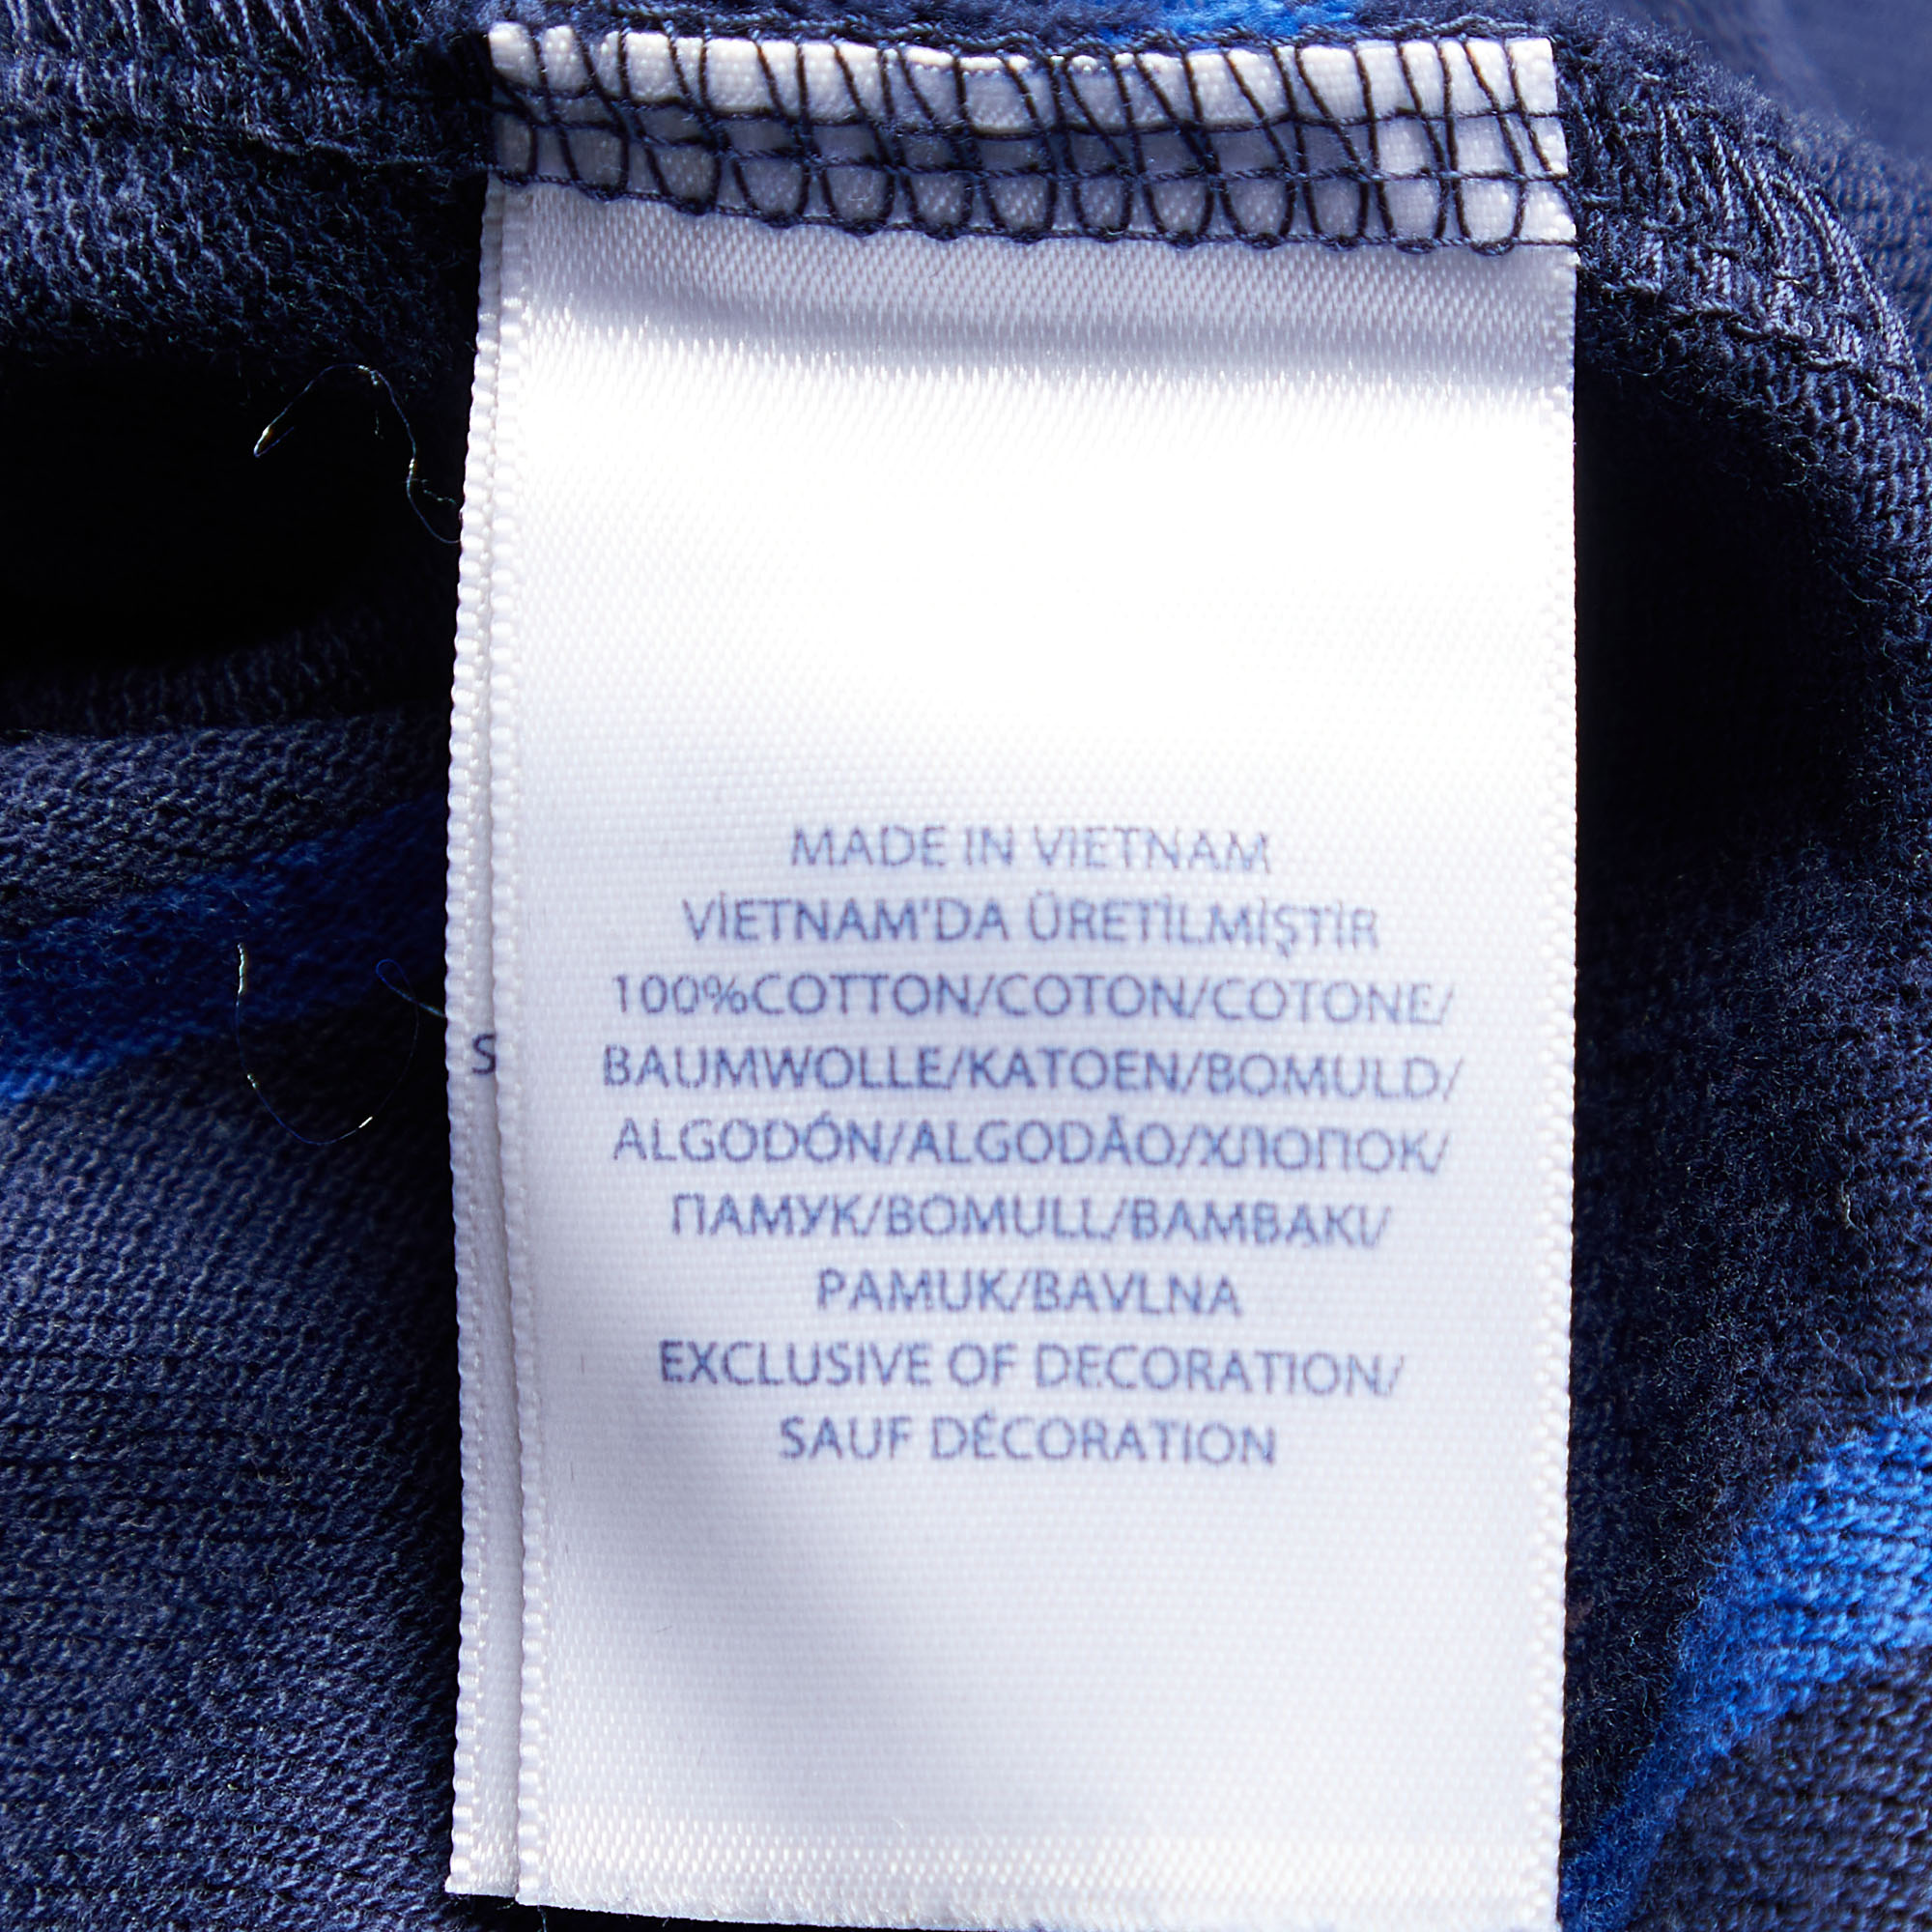 Polo Ralph Lauren Navy Blue Striped Cotton Knit Polo T-Shirt L